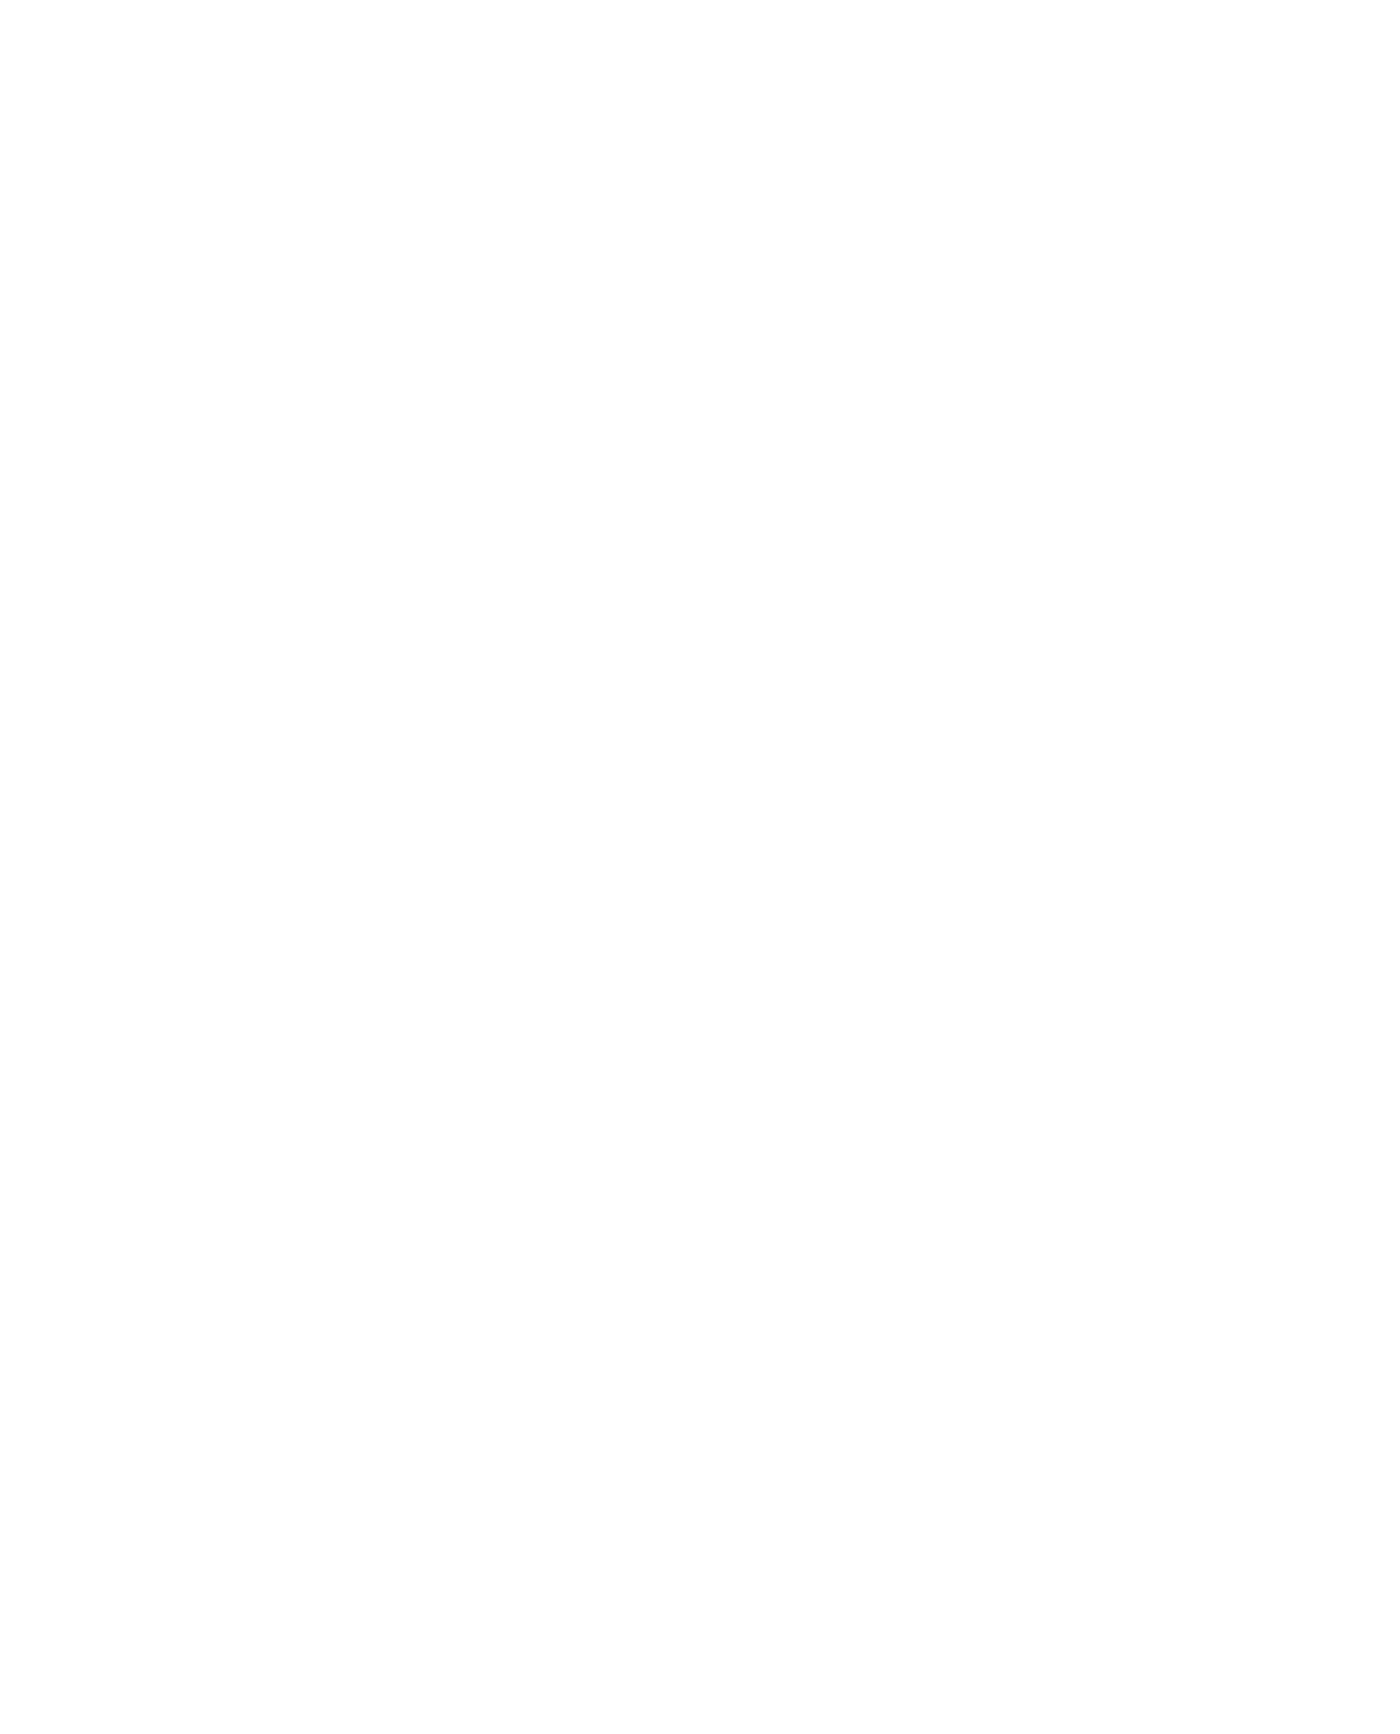 CI Games logo large for dark backgrounds (transparent PNG)